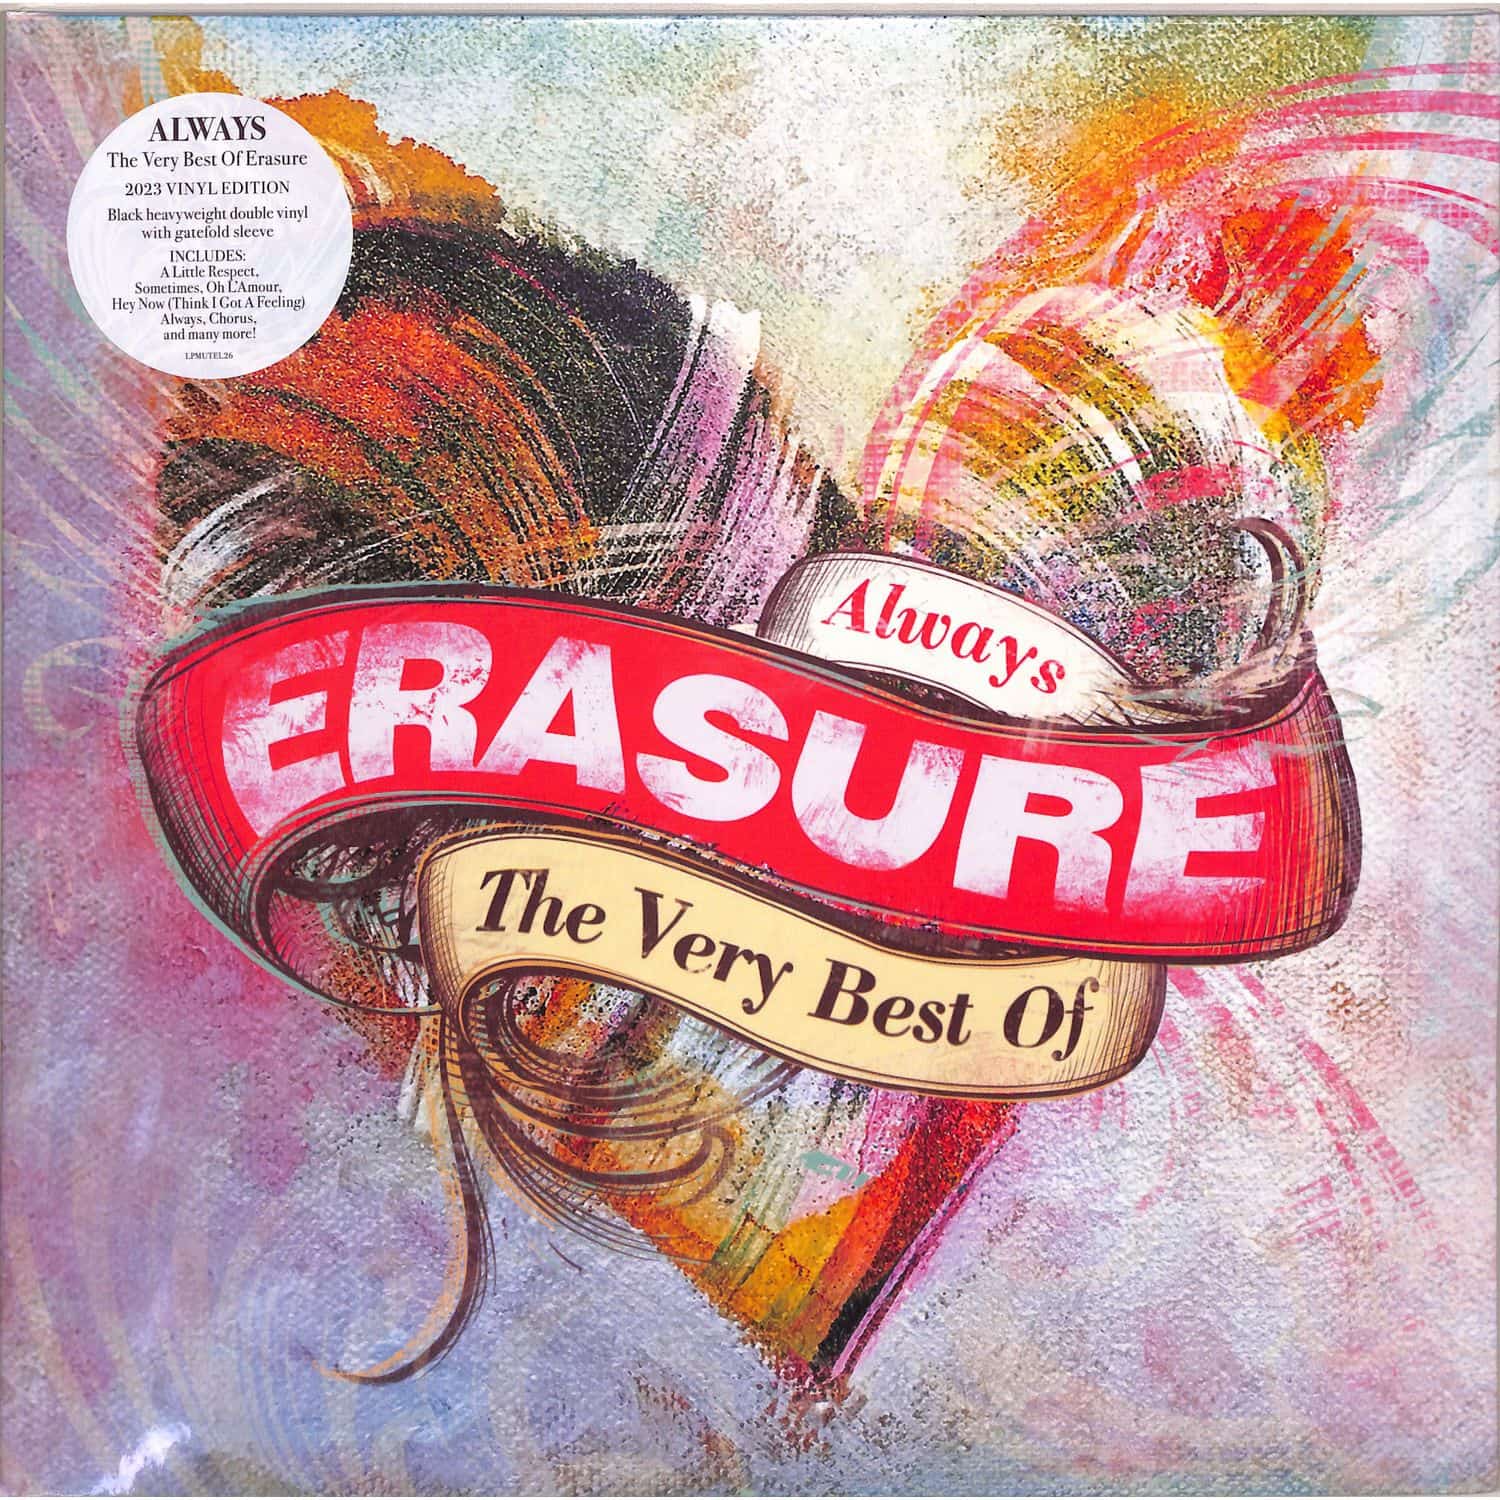 Erasure - ALWAYS-THE VERY BEST OF ERASURE 